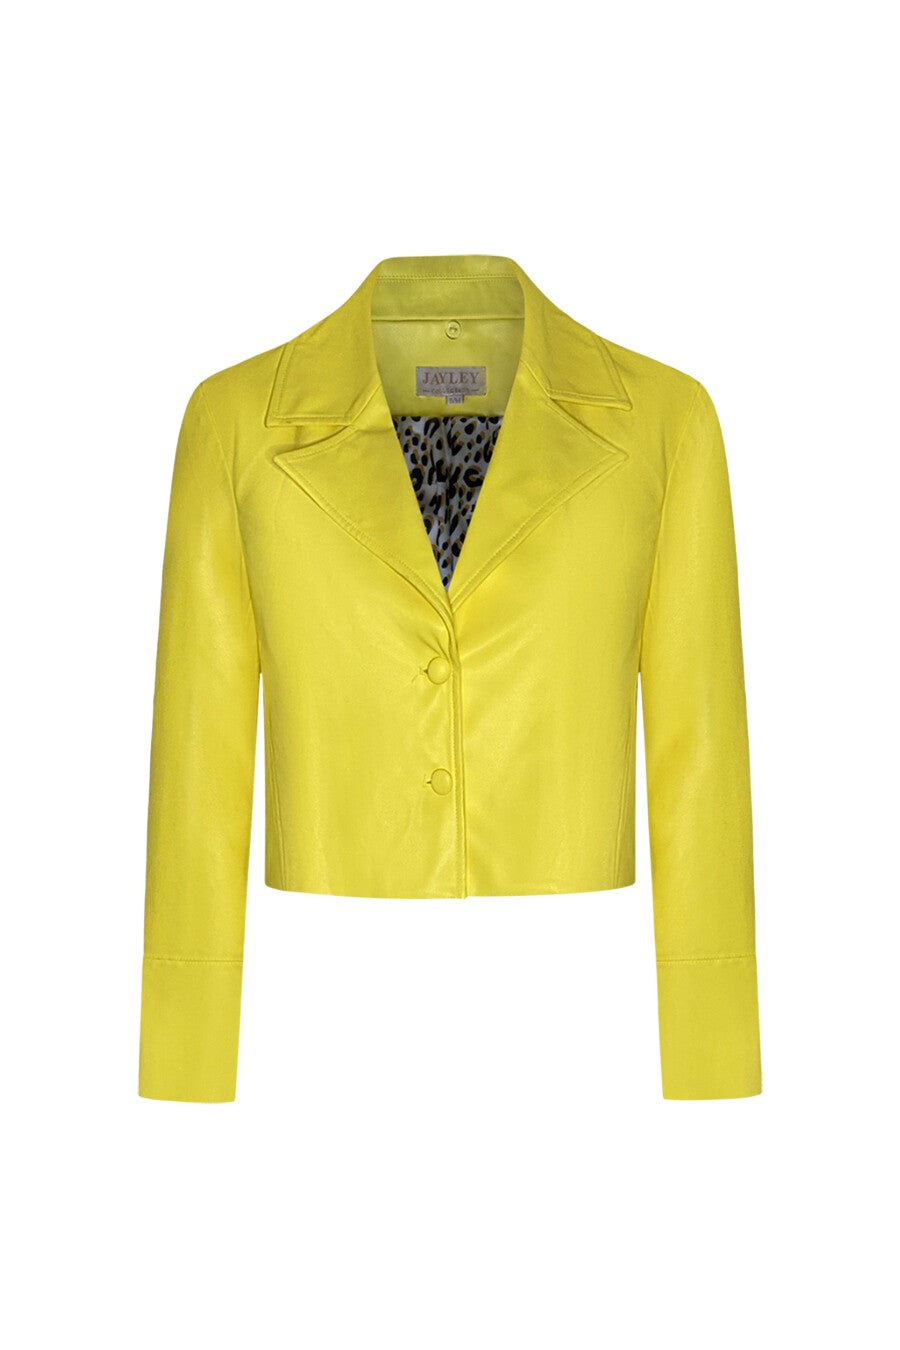 "SET THE VIBE" Lime Yellow Vegan Leather & Mongolian Fur Jacket